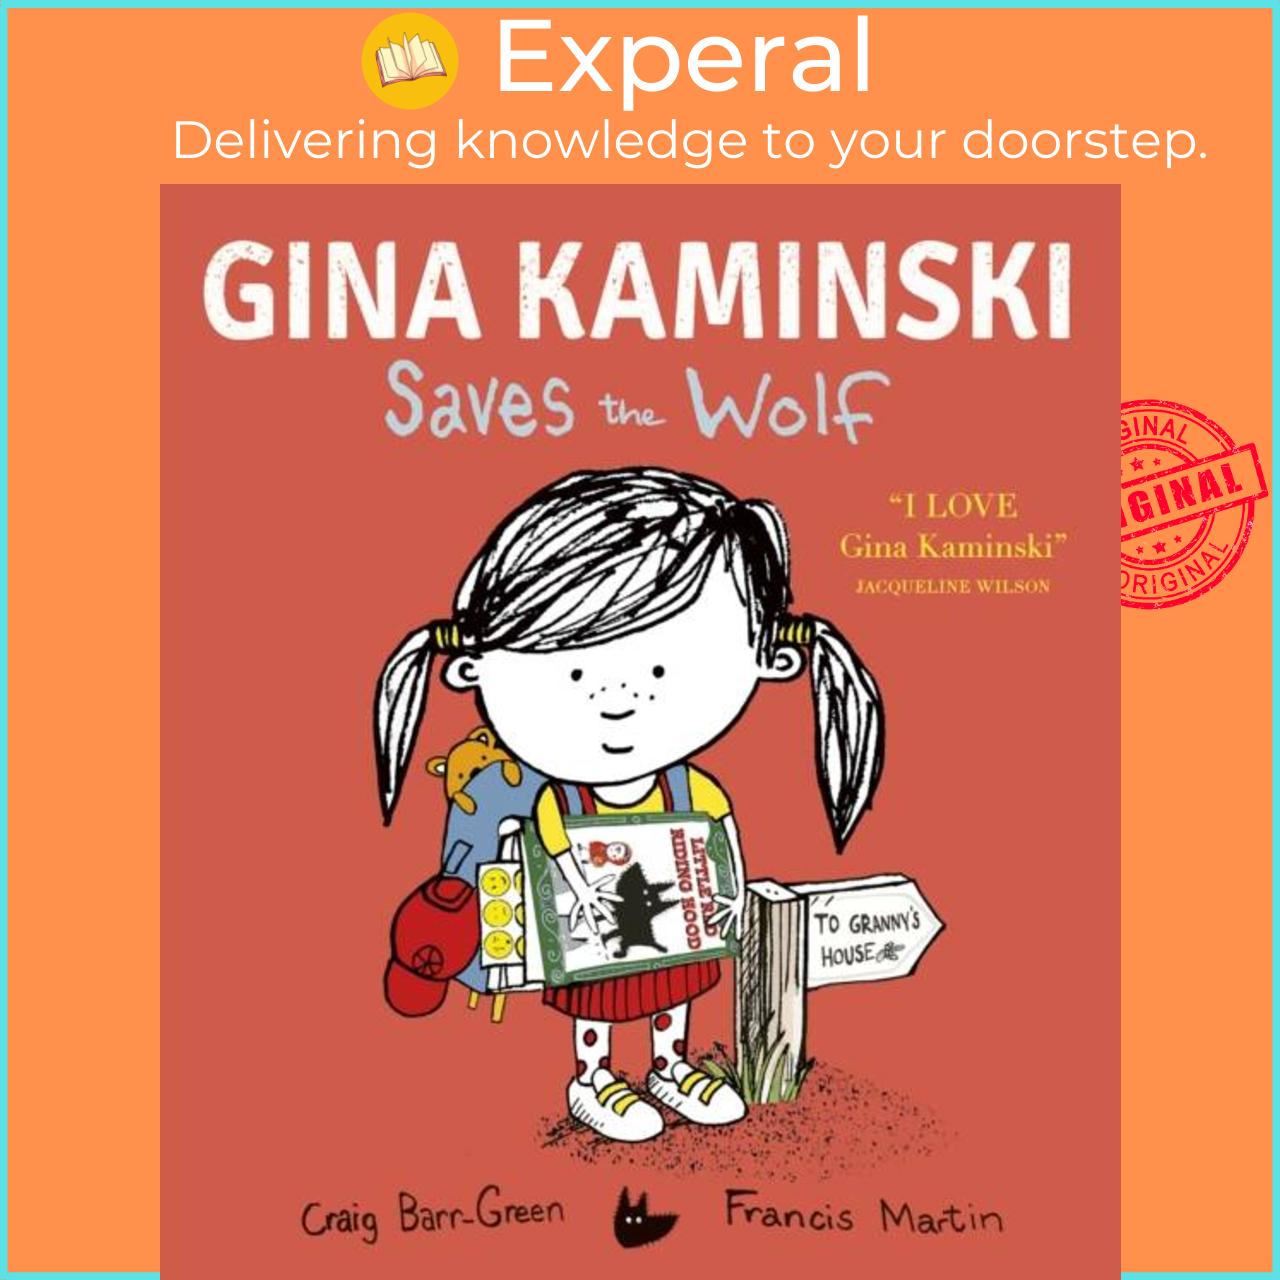 Sách - Gina Kaminski Saves the Wolf by Francis Martin (UK edition, hardcover)